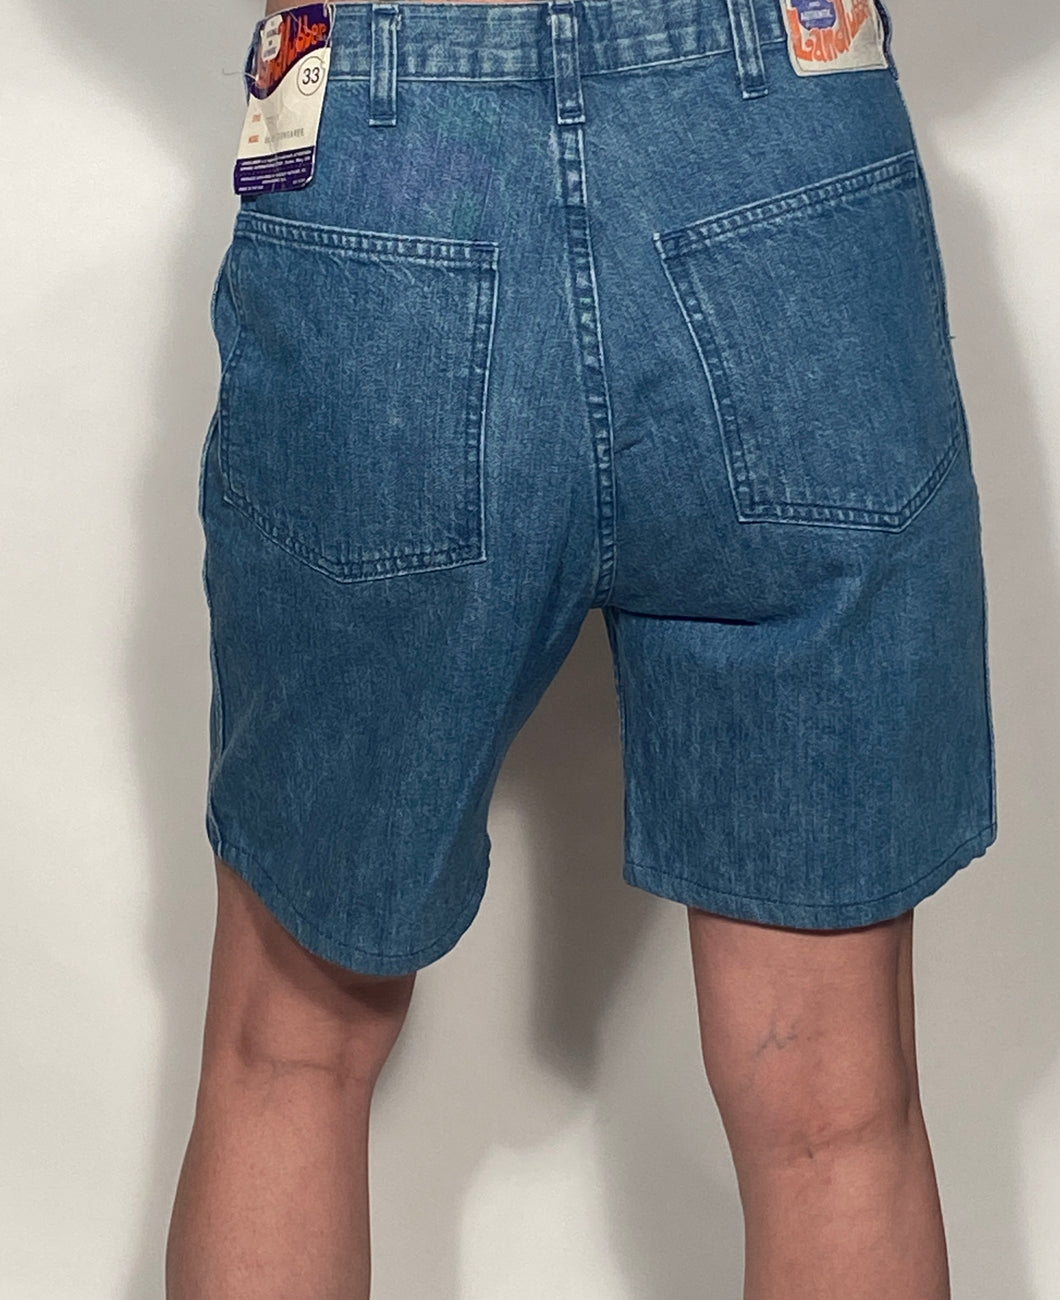 NOS Vintage 1970s Landlubber High Waisted Jean Shorts